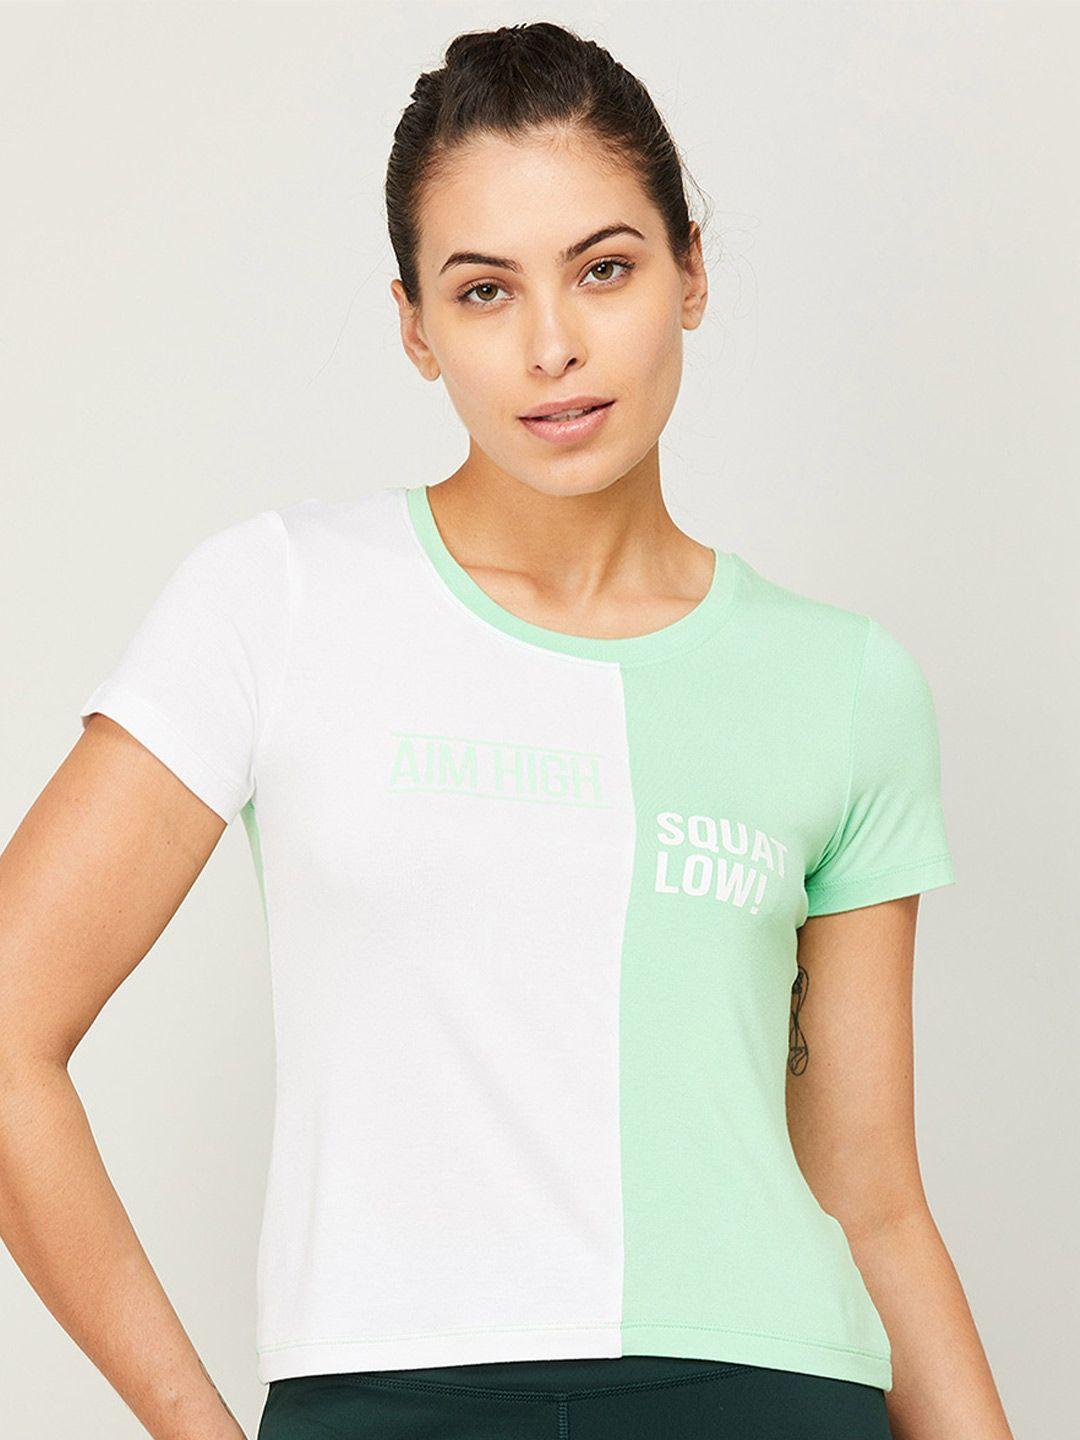 kappa-women-green-&-white-colourblocked-t-shirt